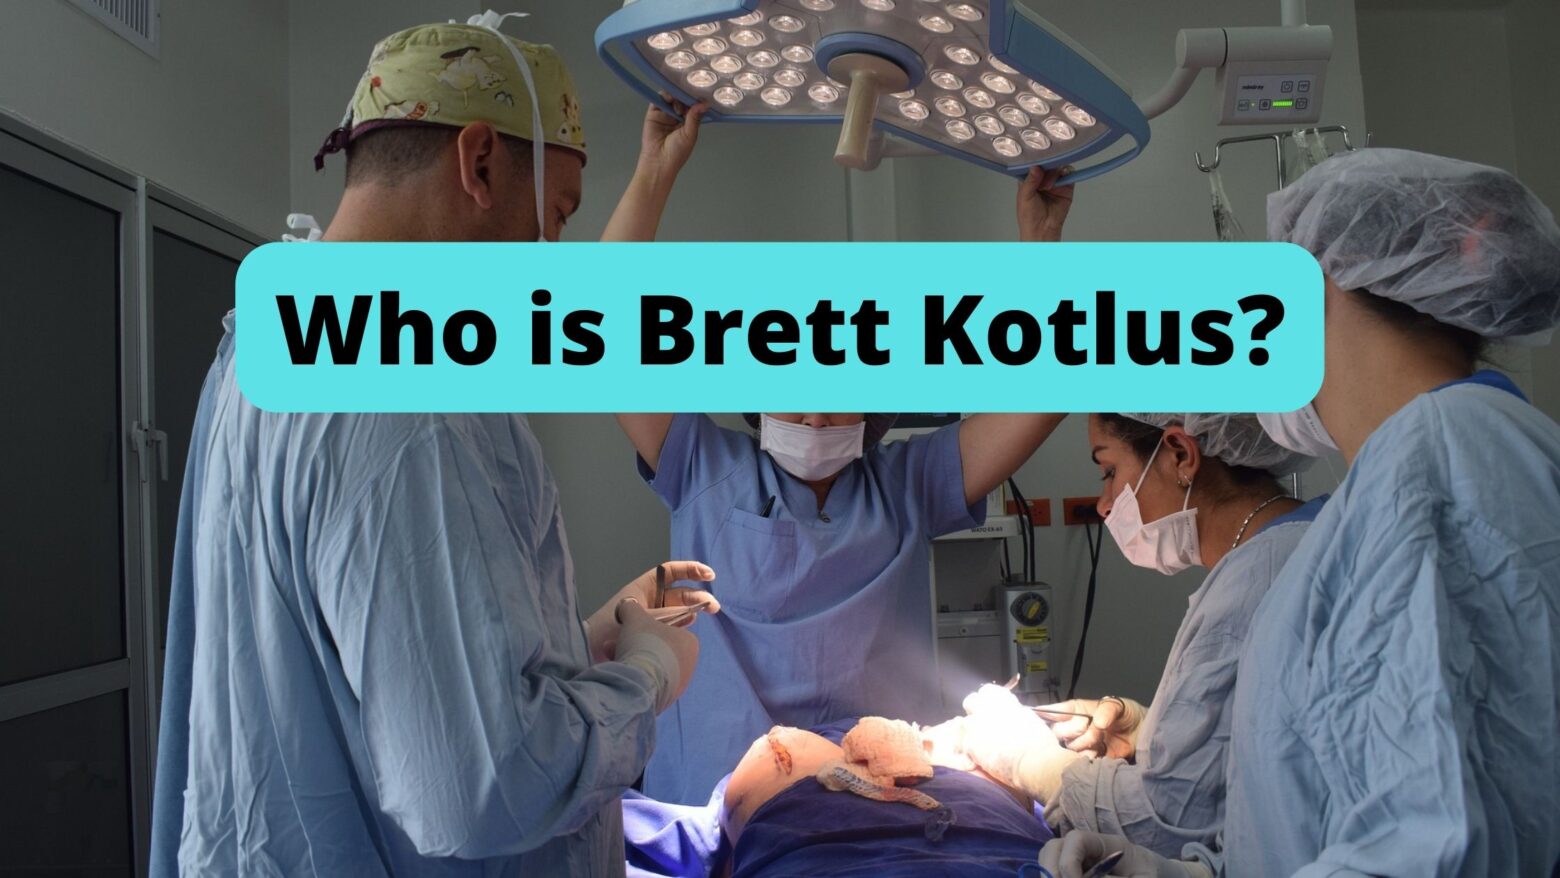 Who is Brett Kotlus?